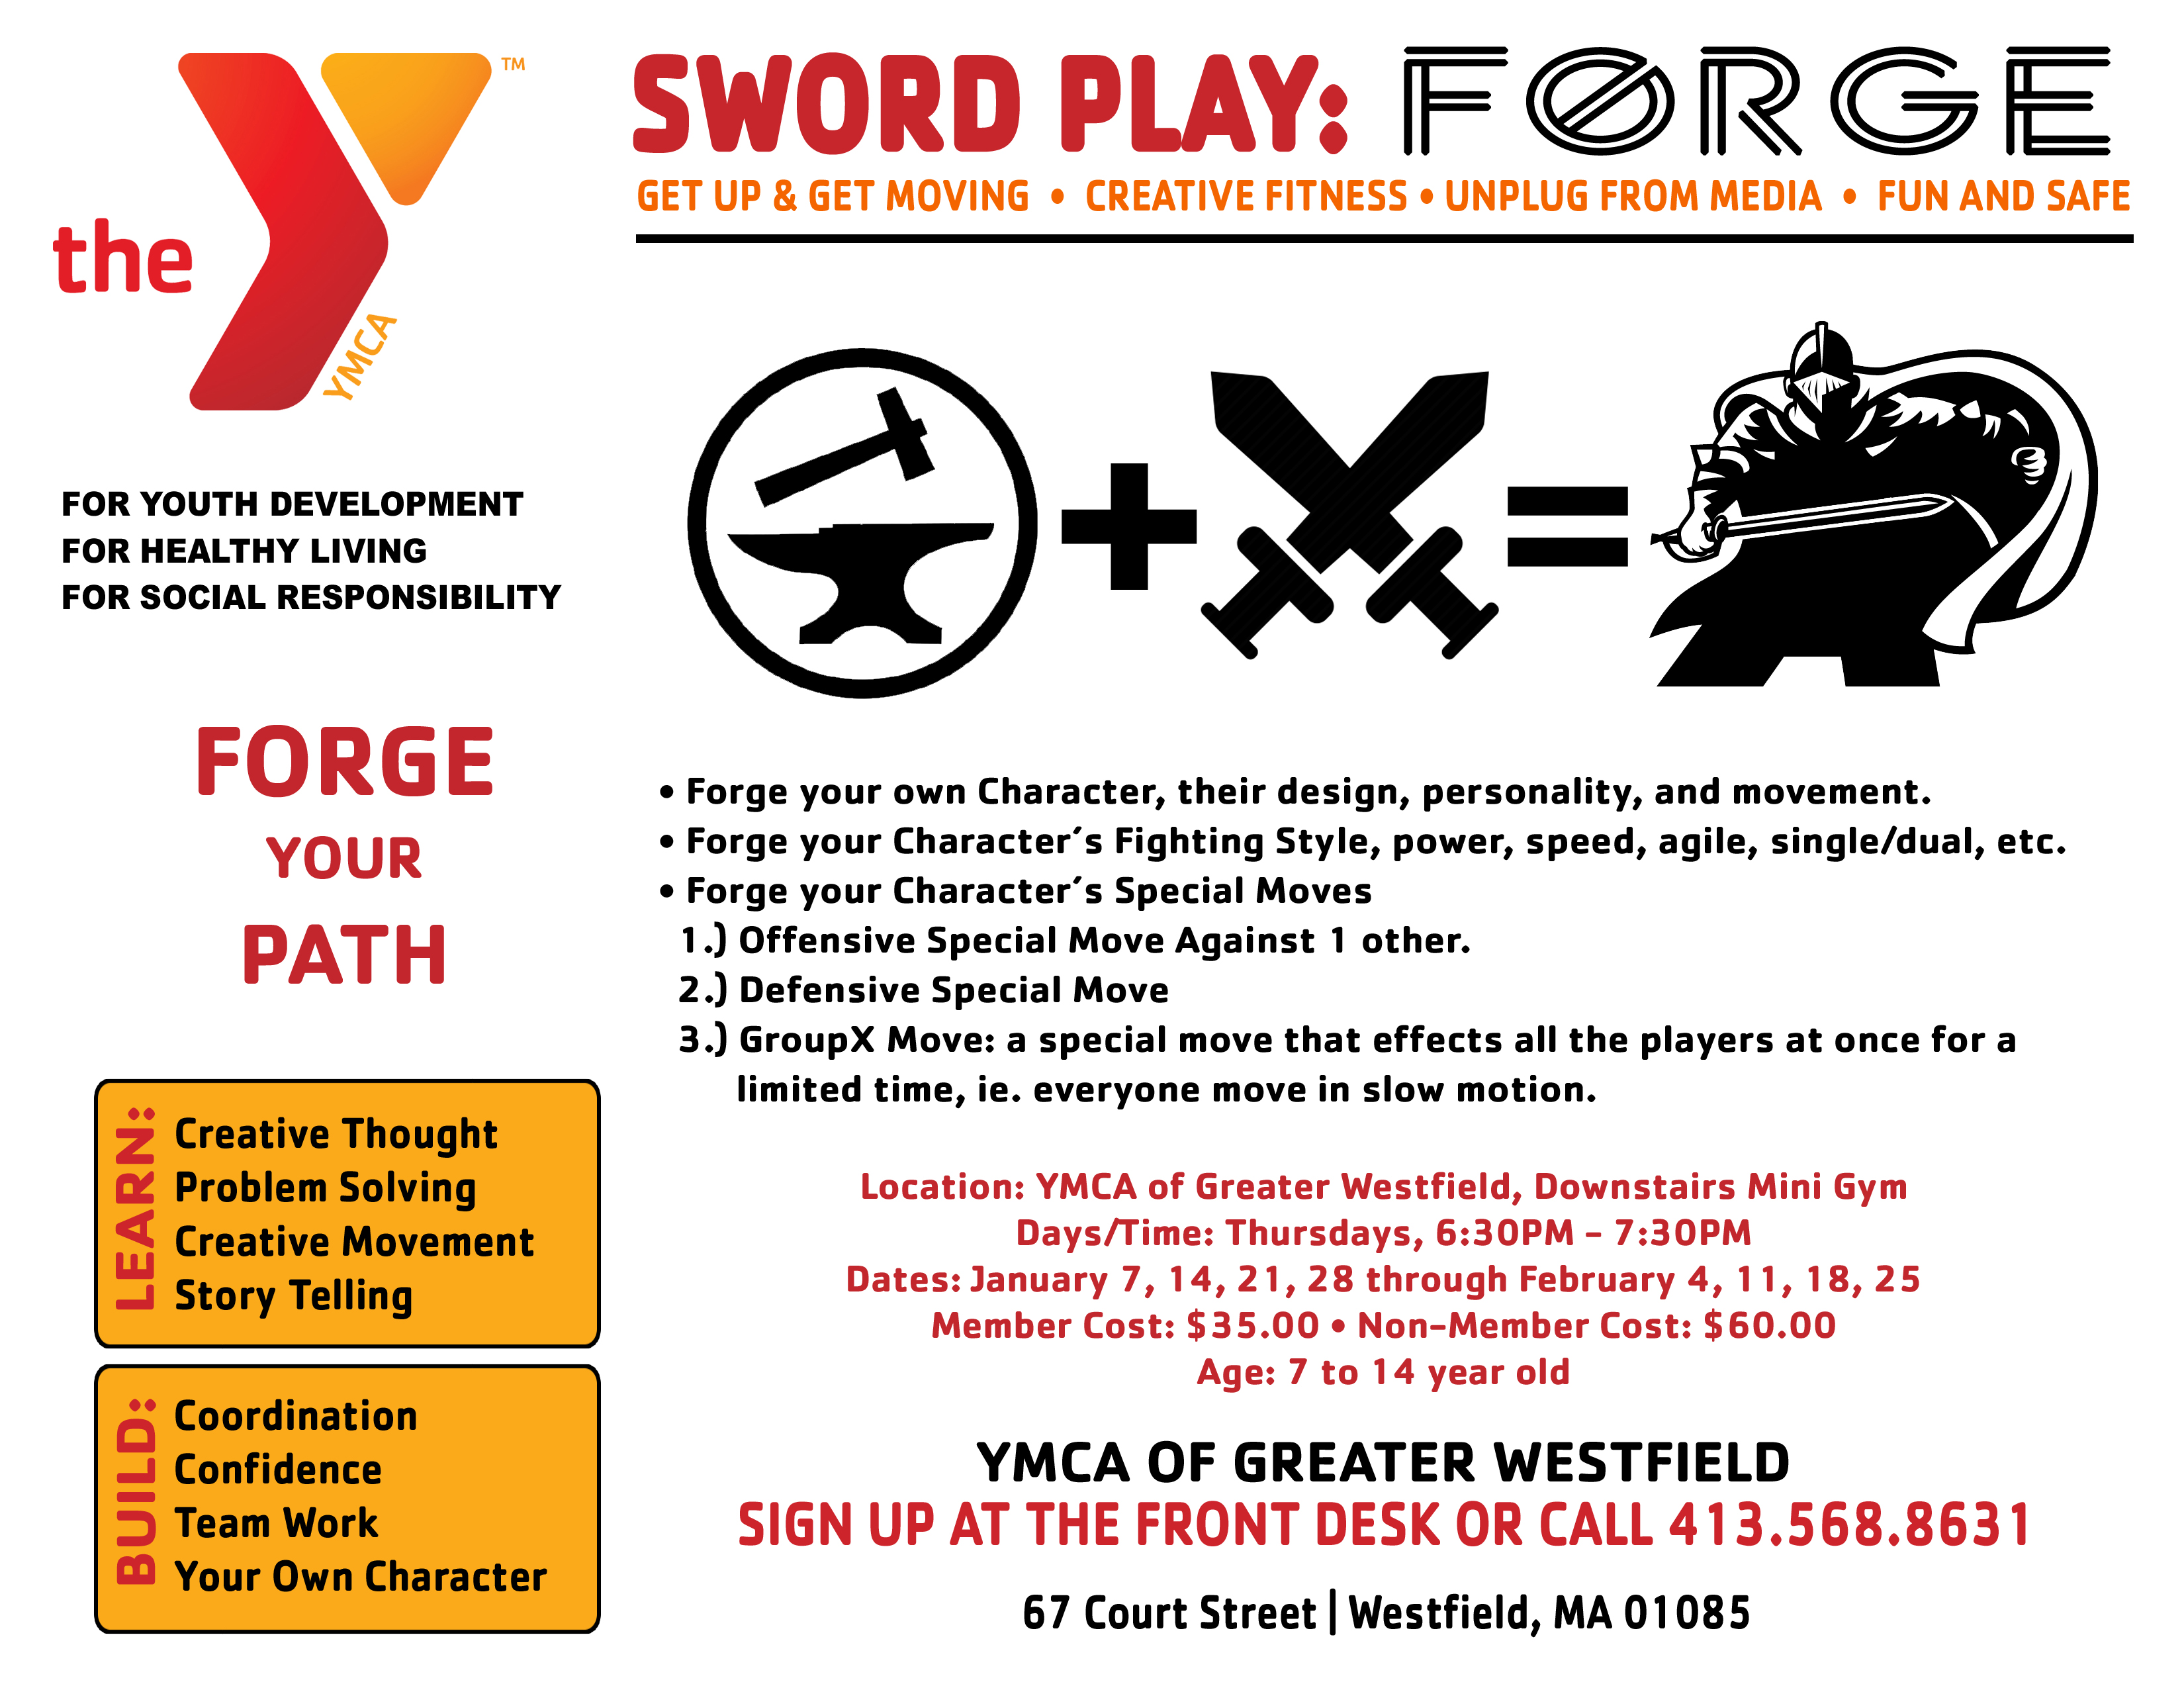 swordplay-forge